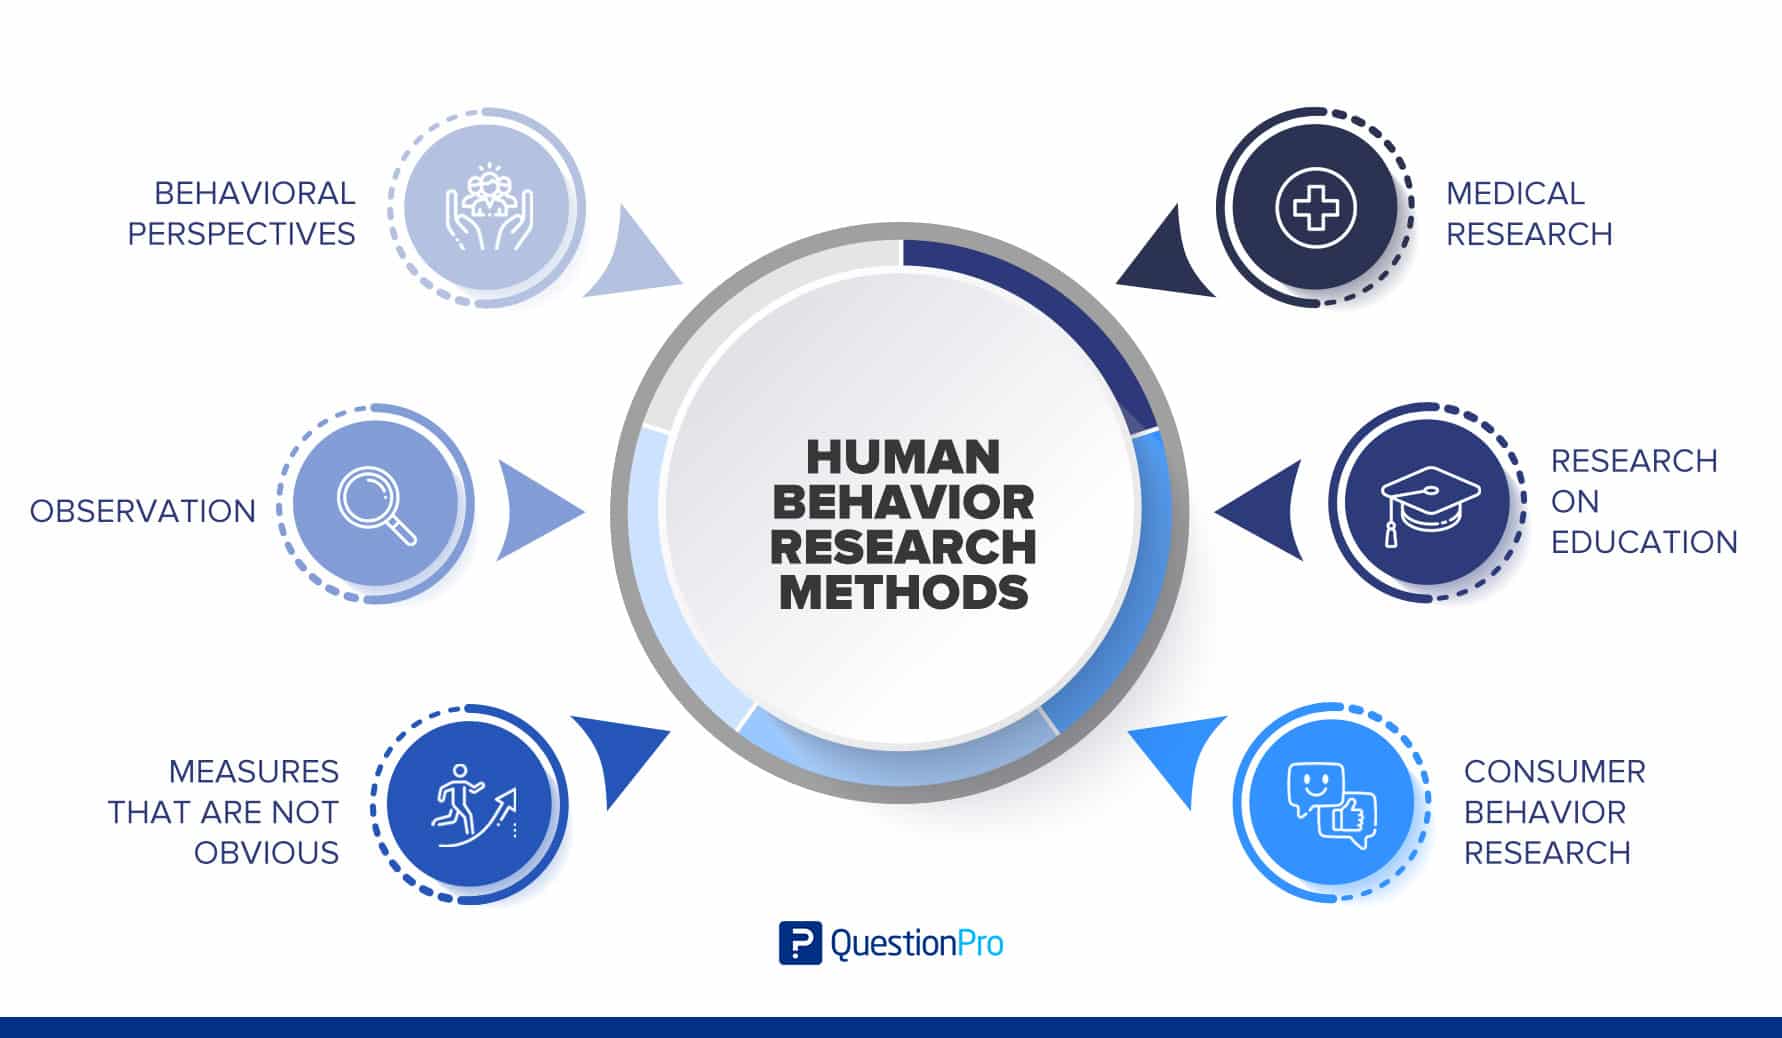 Human Behavior Research Methods